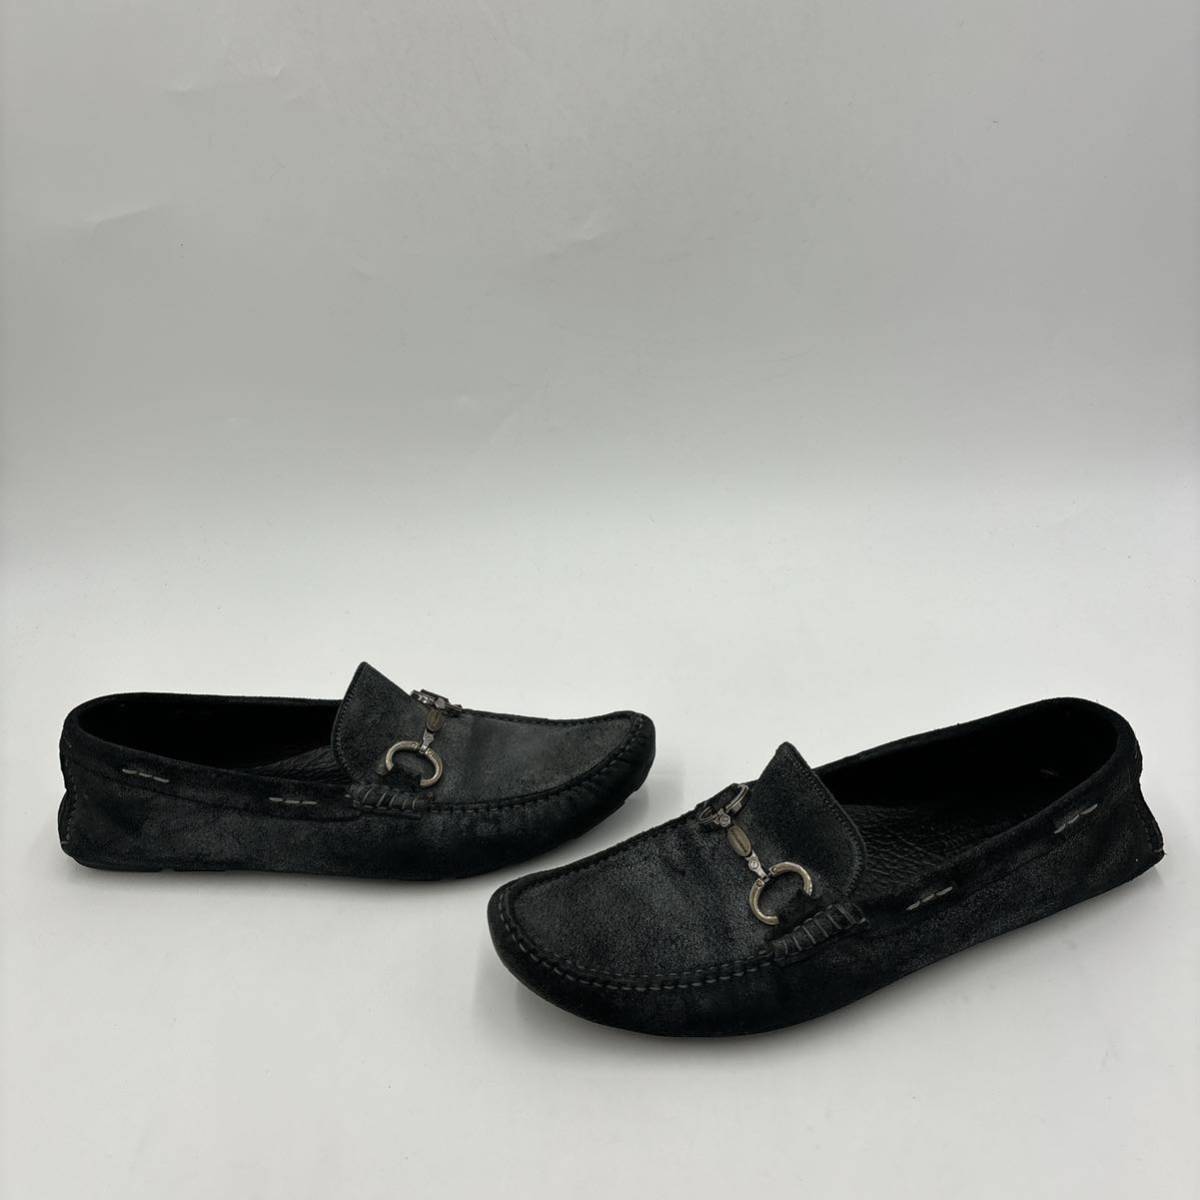 F ＊ イタリア製 '高級紳士靴' DOLCE&GABBANA ドルチェ&ガッバーナ 本革 ビットローファー 革靴 モカシン UK8.5 27.5cm メンズ シューズ_画像3